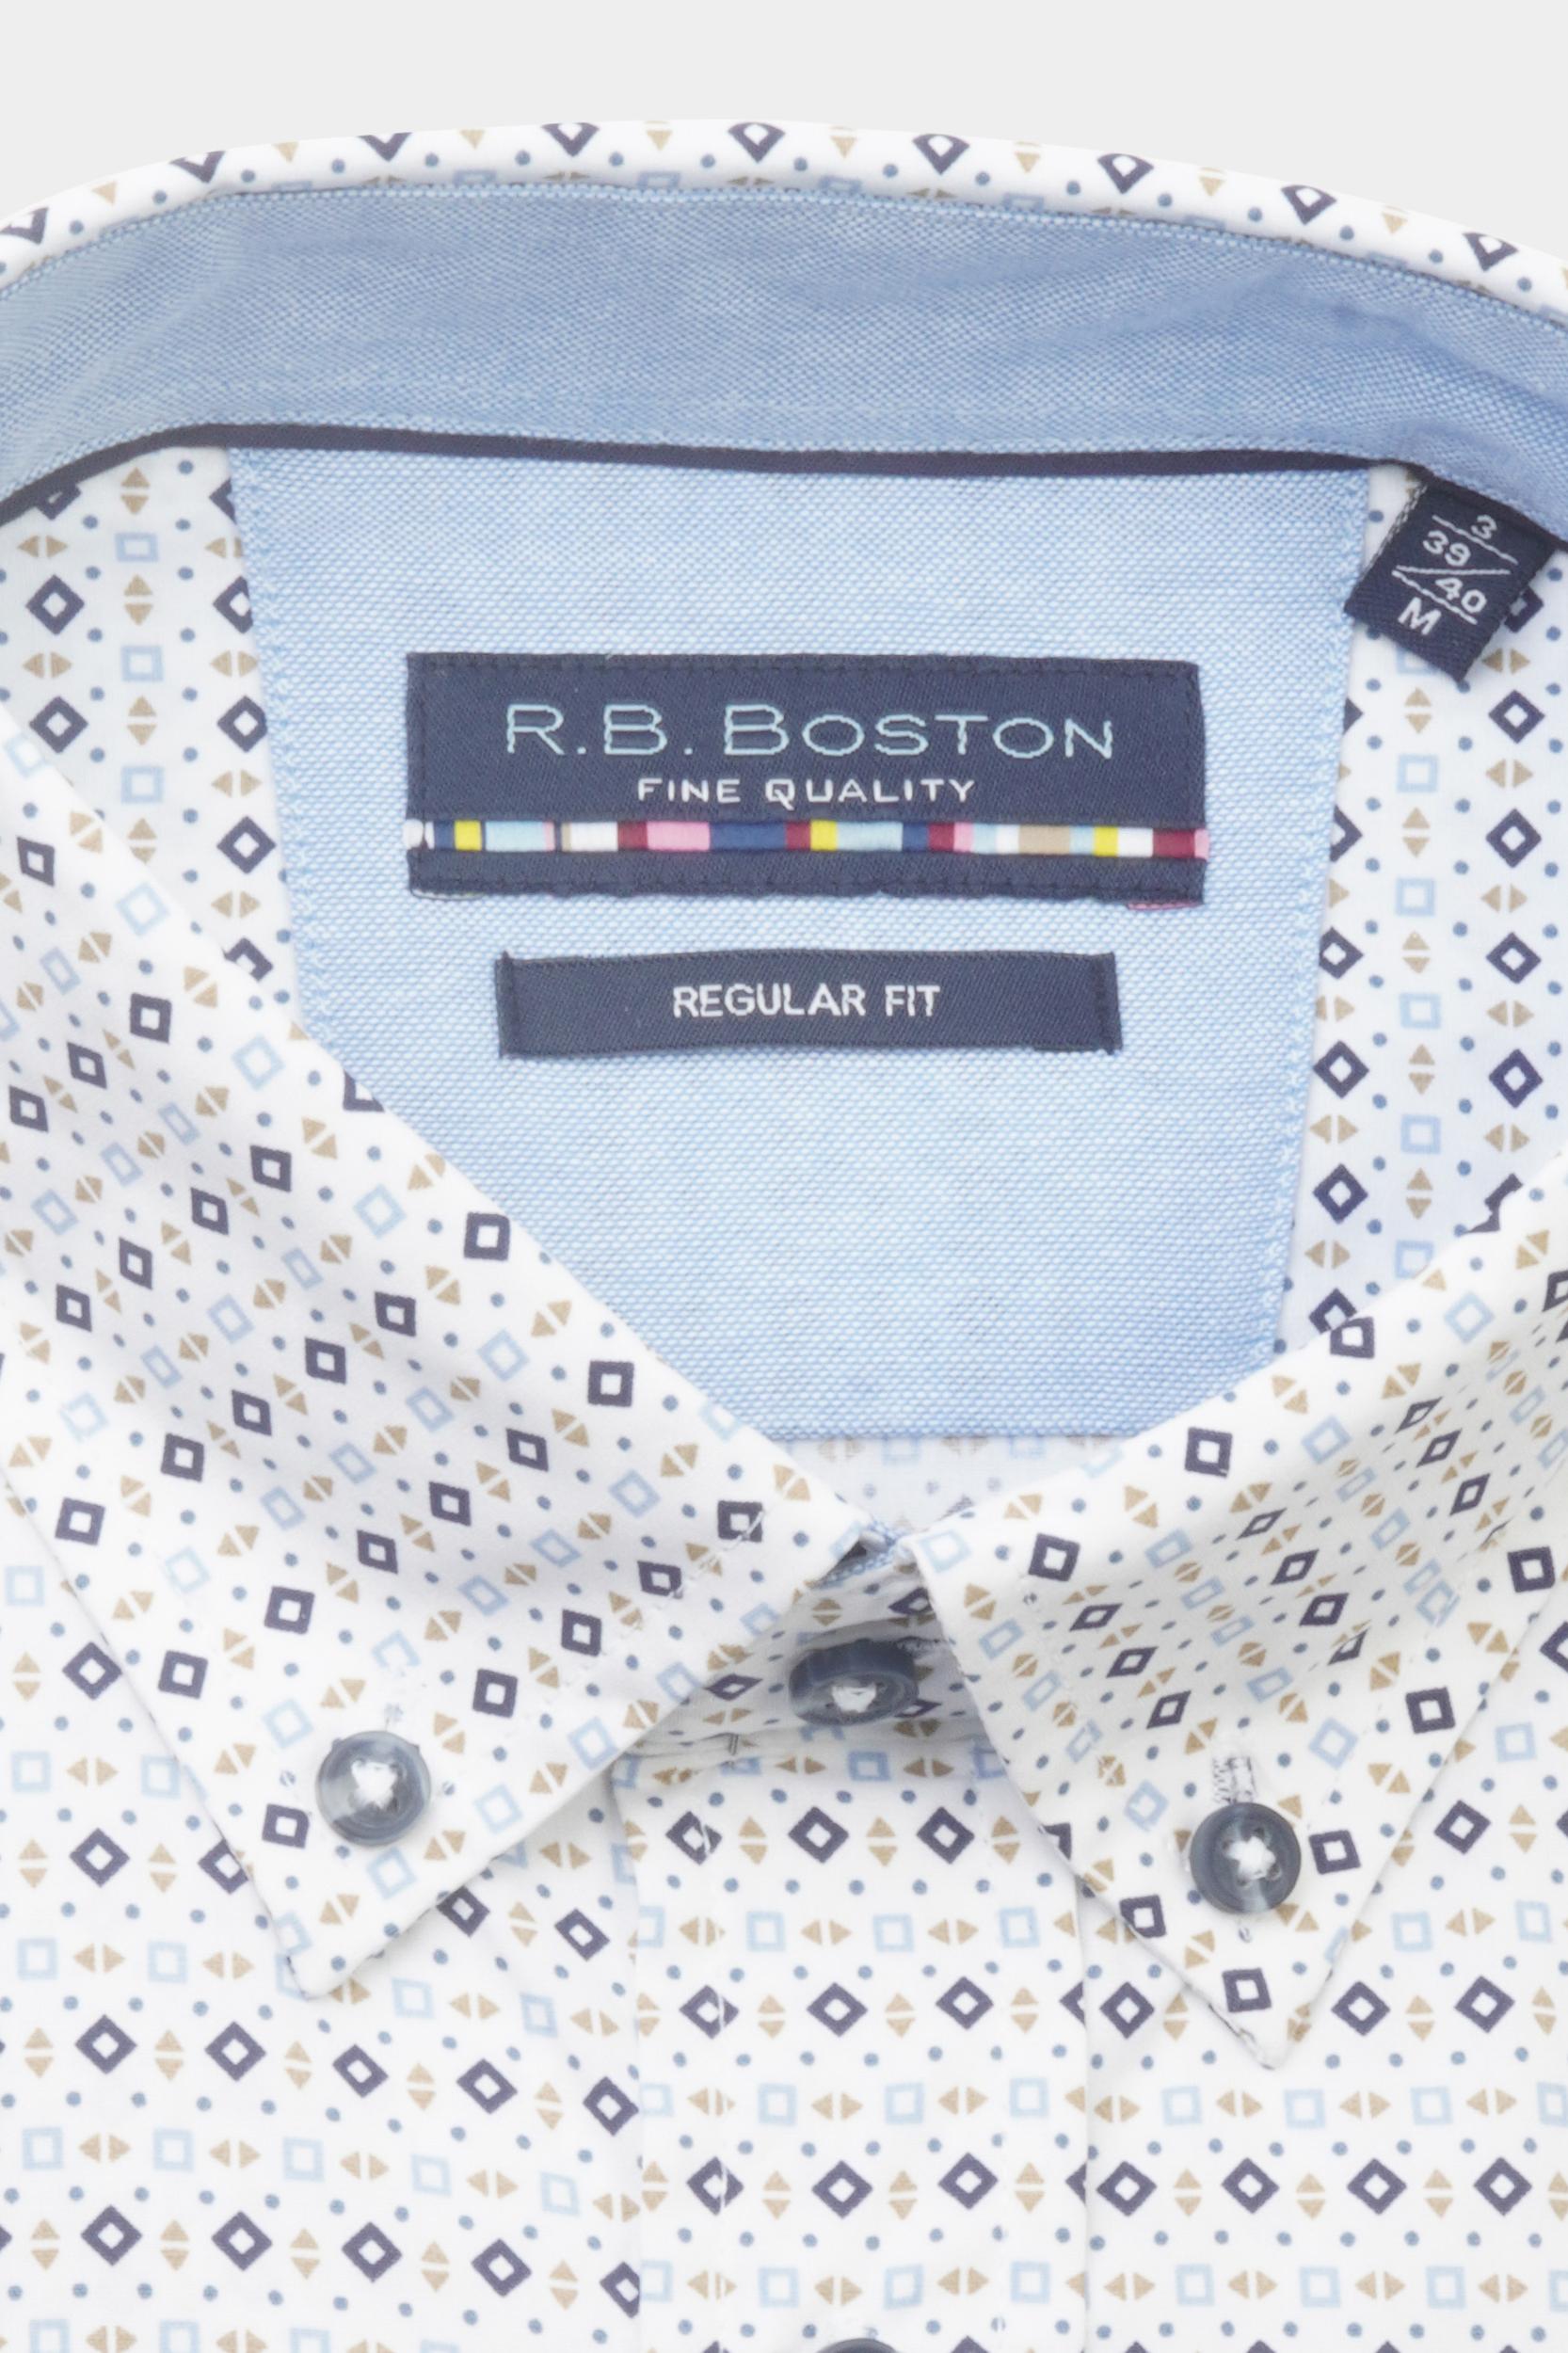 R.B. Boston Casual hemd lange mouw Blauw Franklin LS Button Down 327670/620